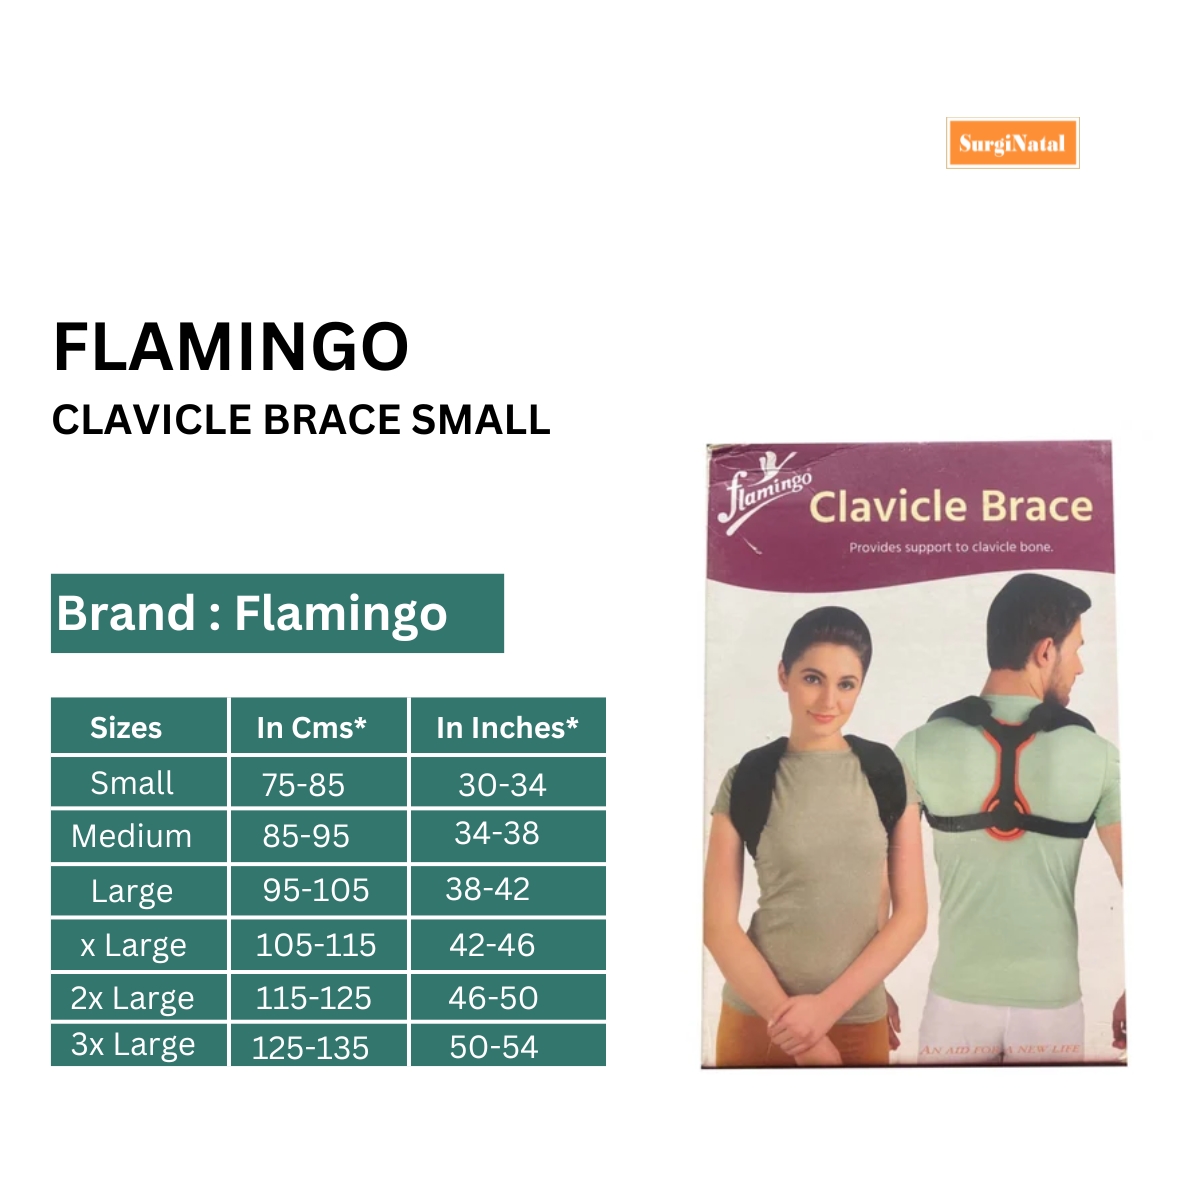 flamingo clavicle brace small